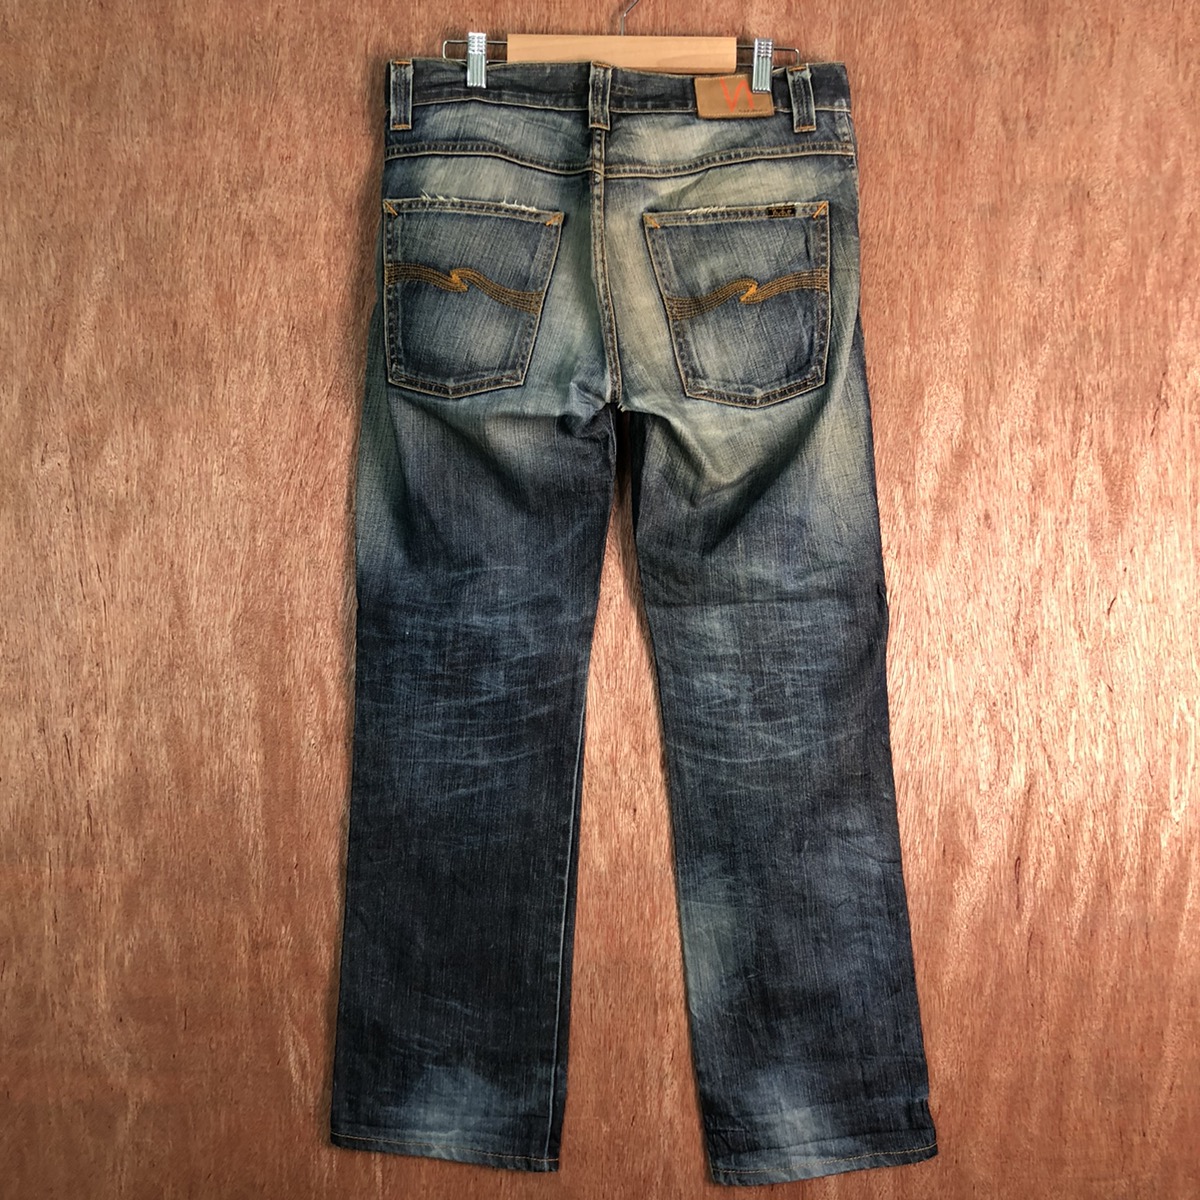 Nudie Jeans Co Blue Denim Jeans Pants #c139 - 1